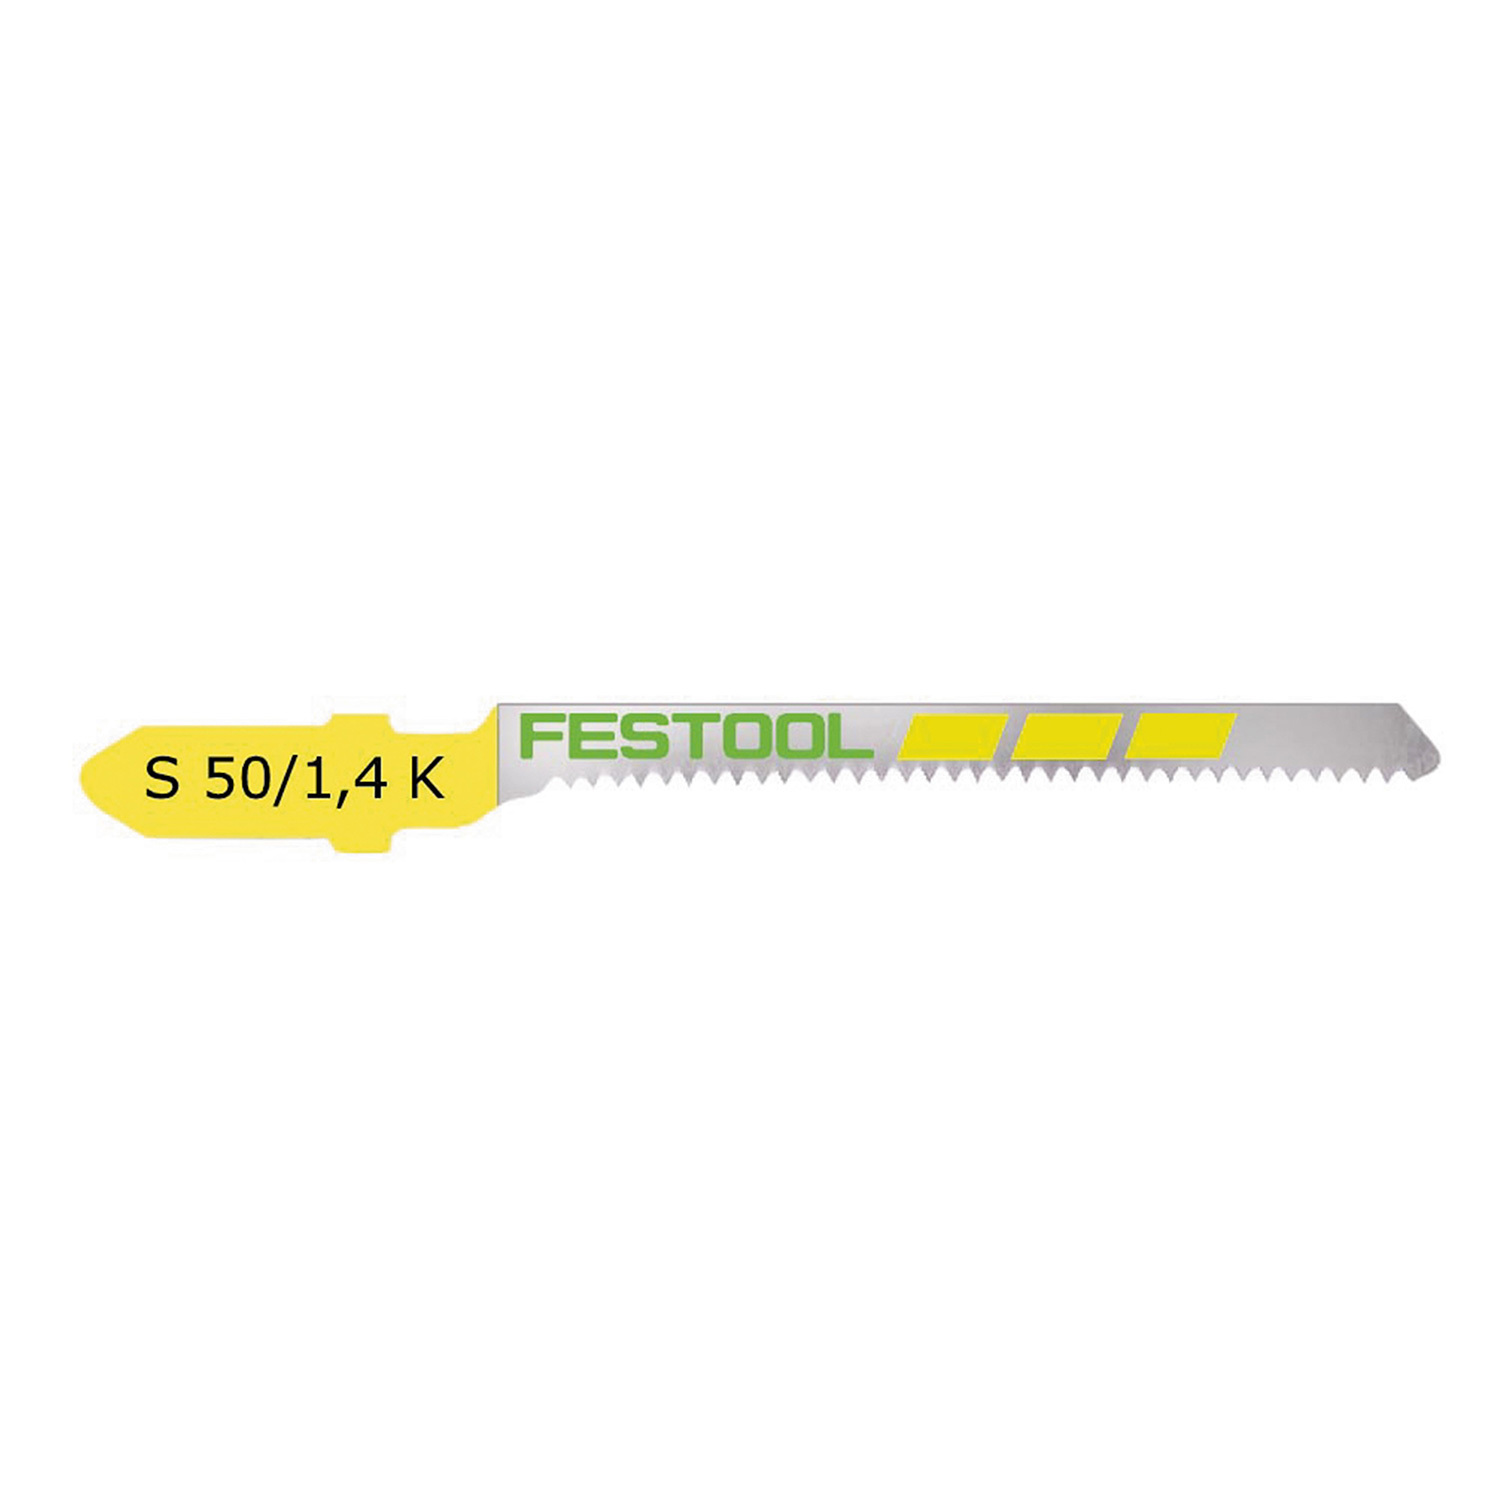 Festool Curved Cut Jigsaw Blade S 75mm x 1.4mm K - 5 Pack 204267